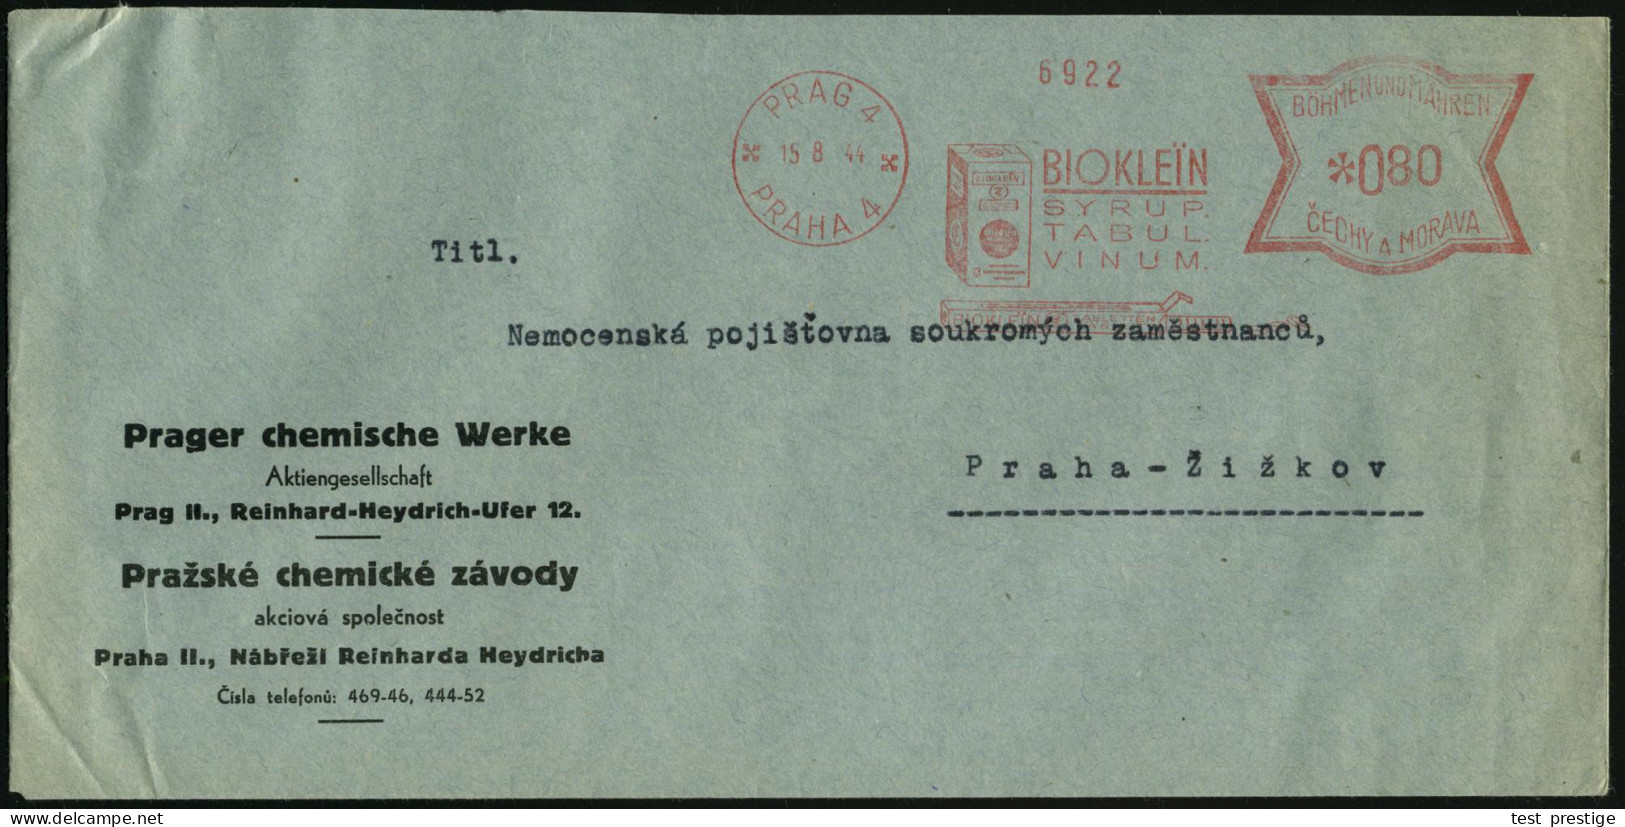 BÖHMEN & MÄHREN 1944 (15.8.) AFS Francotyp: PRAG 4/PRAHA 4/BIOKLEIN/SYRUP/TABUL/VINUM.. (Bioklein-Packung) Firmen-Bf.: P - Chimica